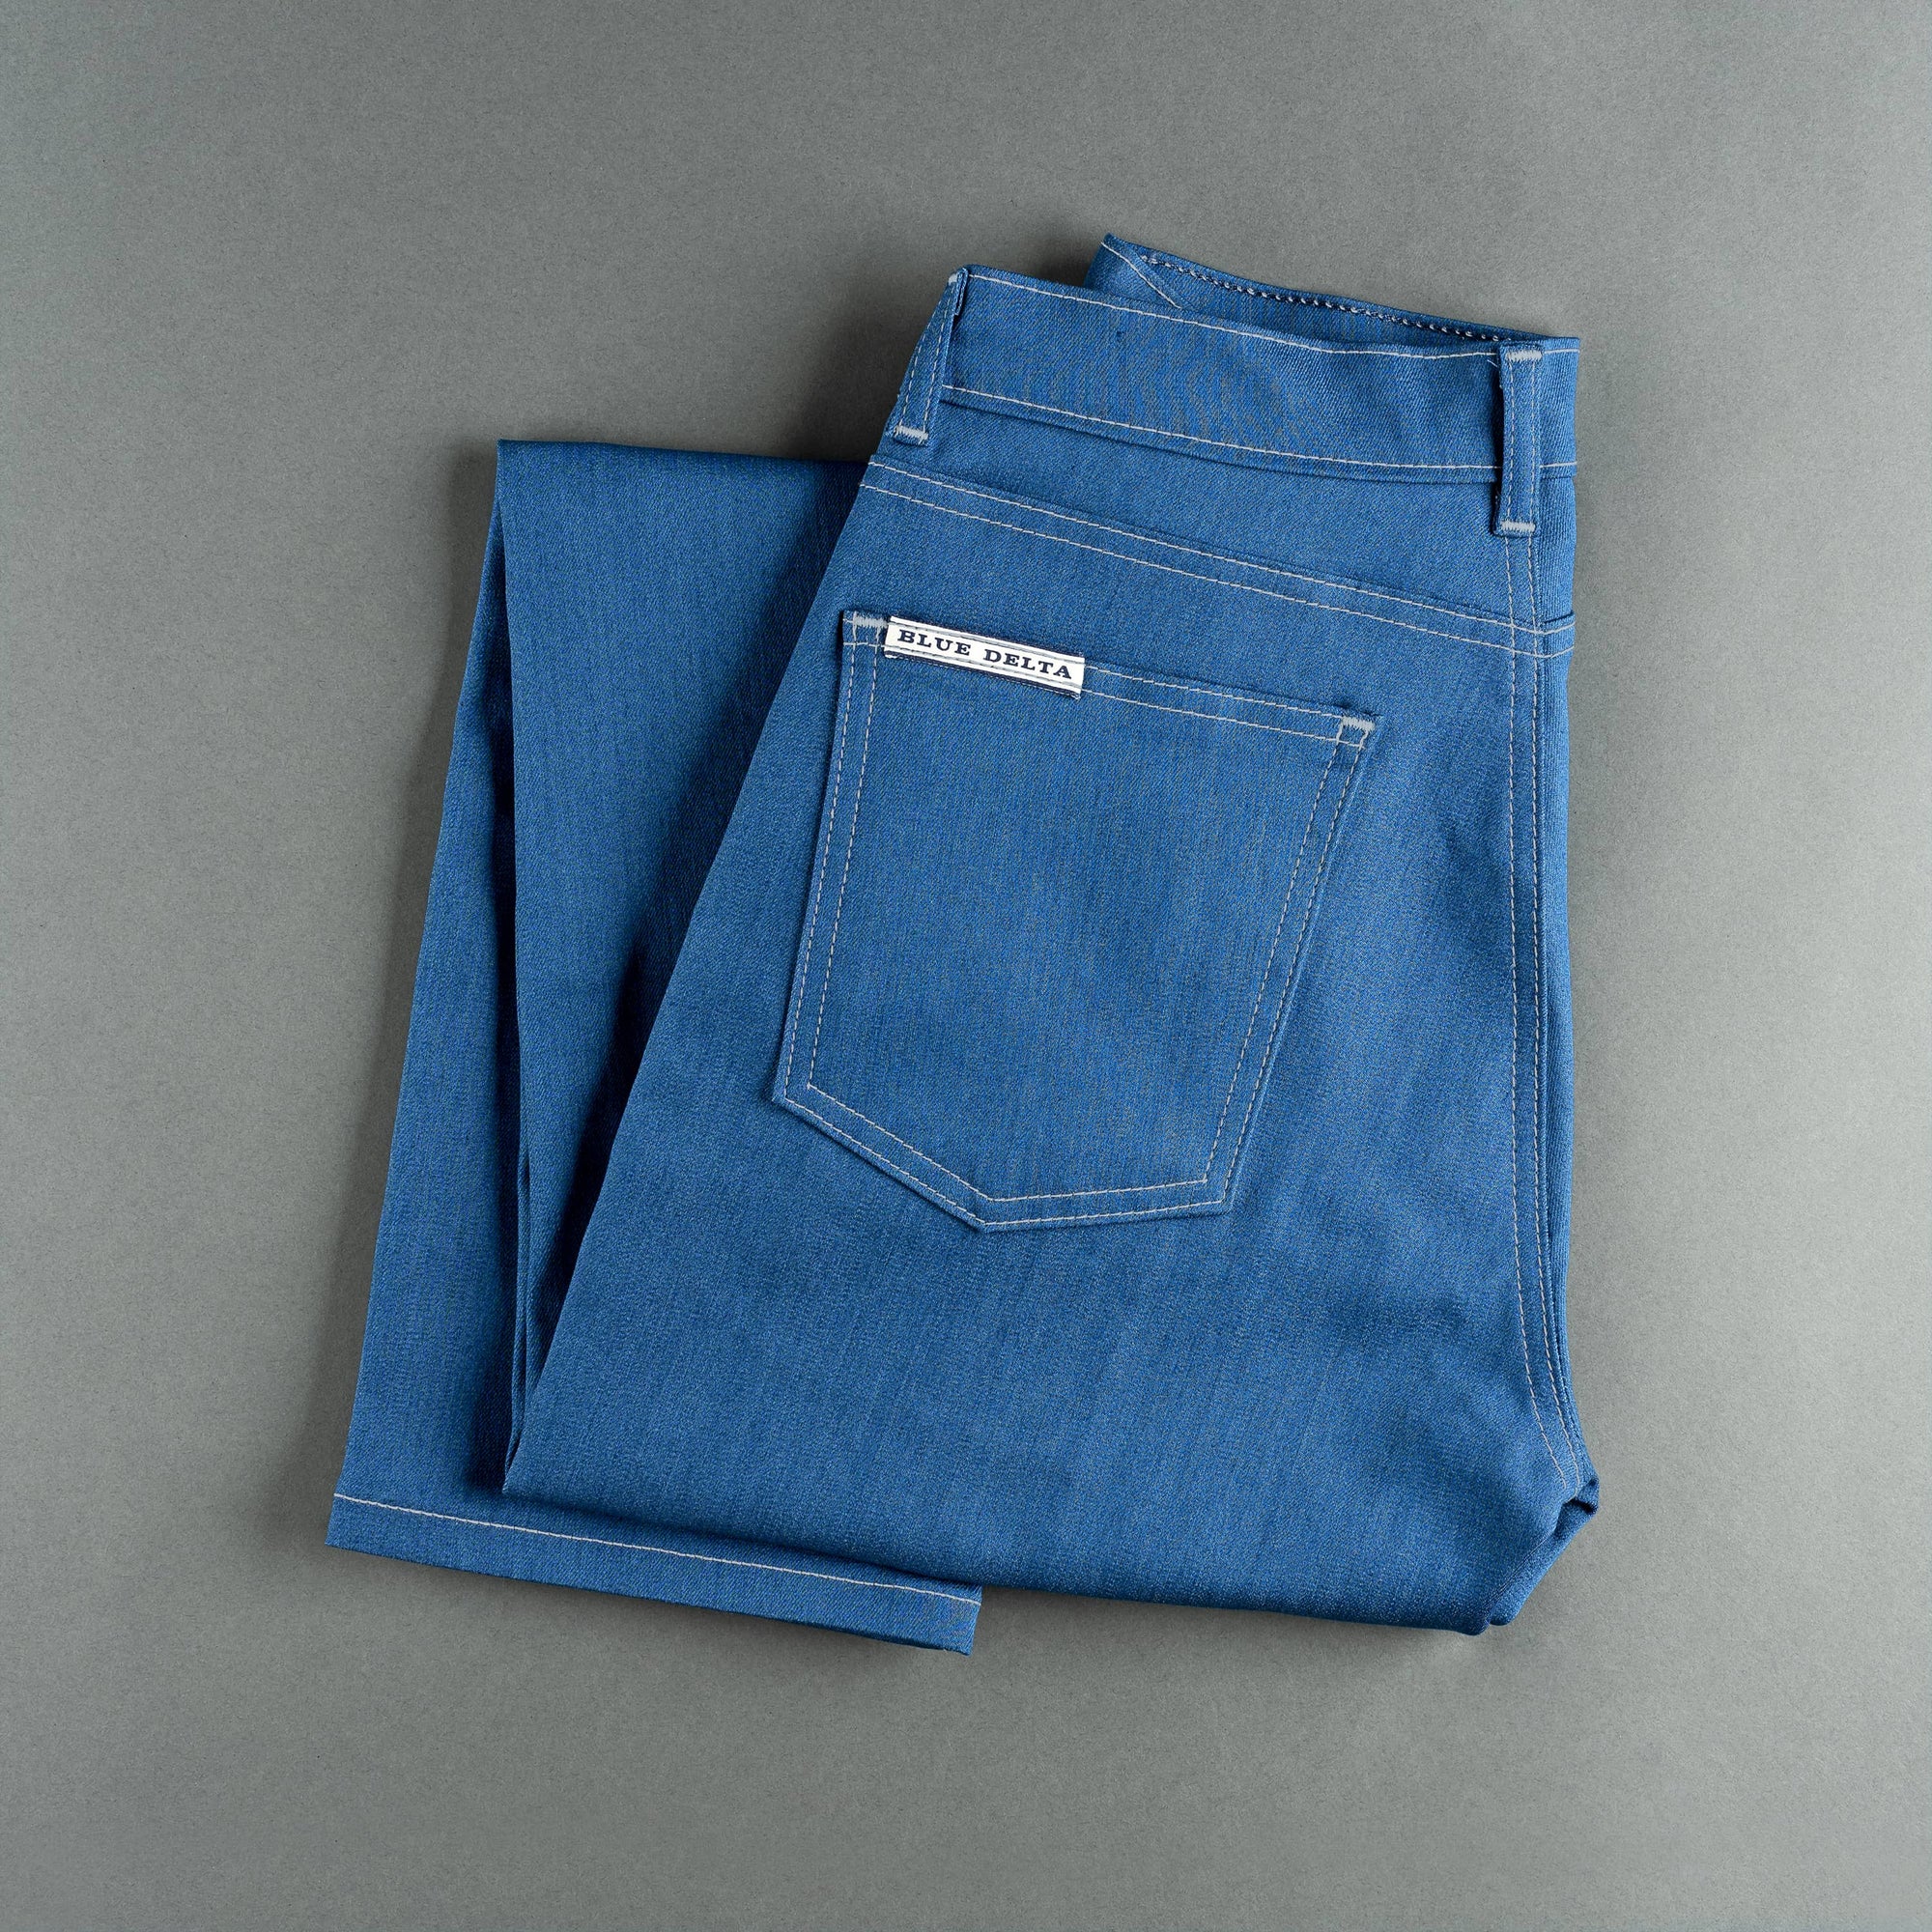 ga blue jeans price